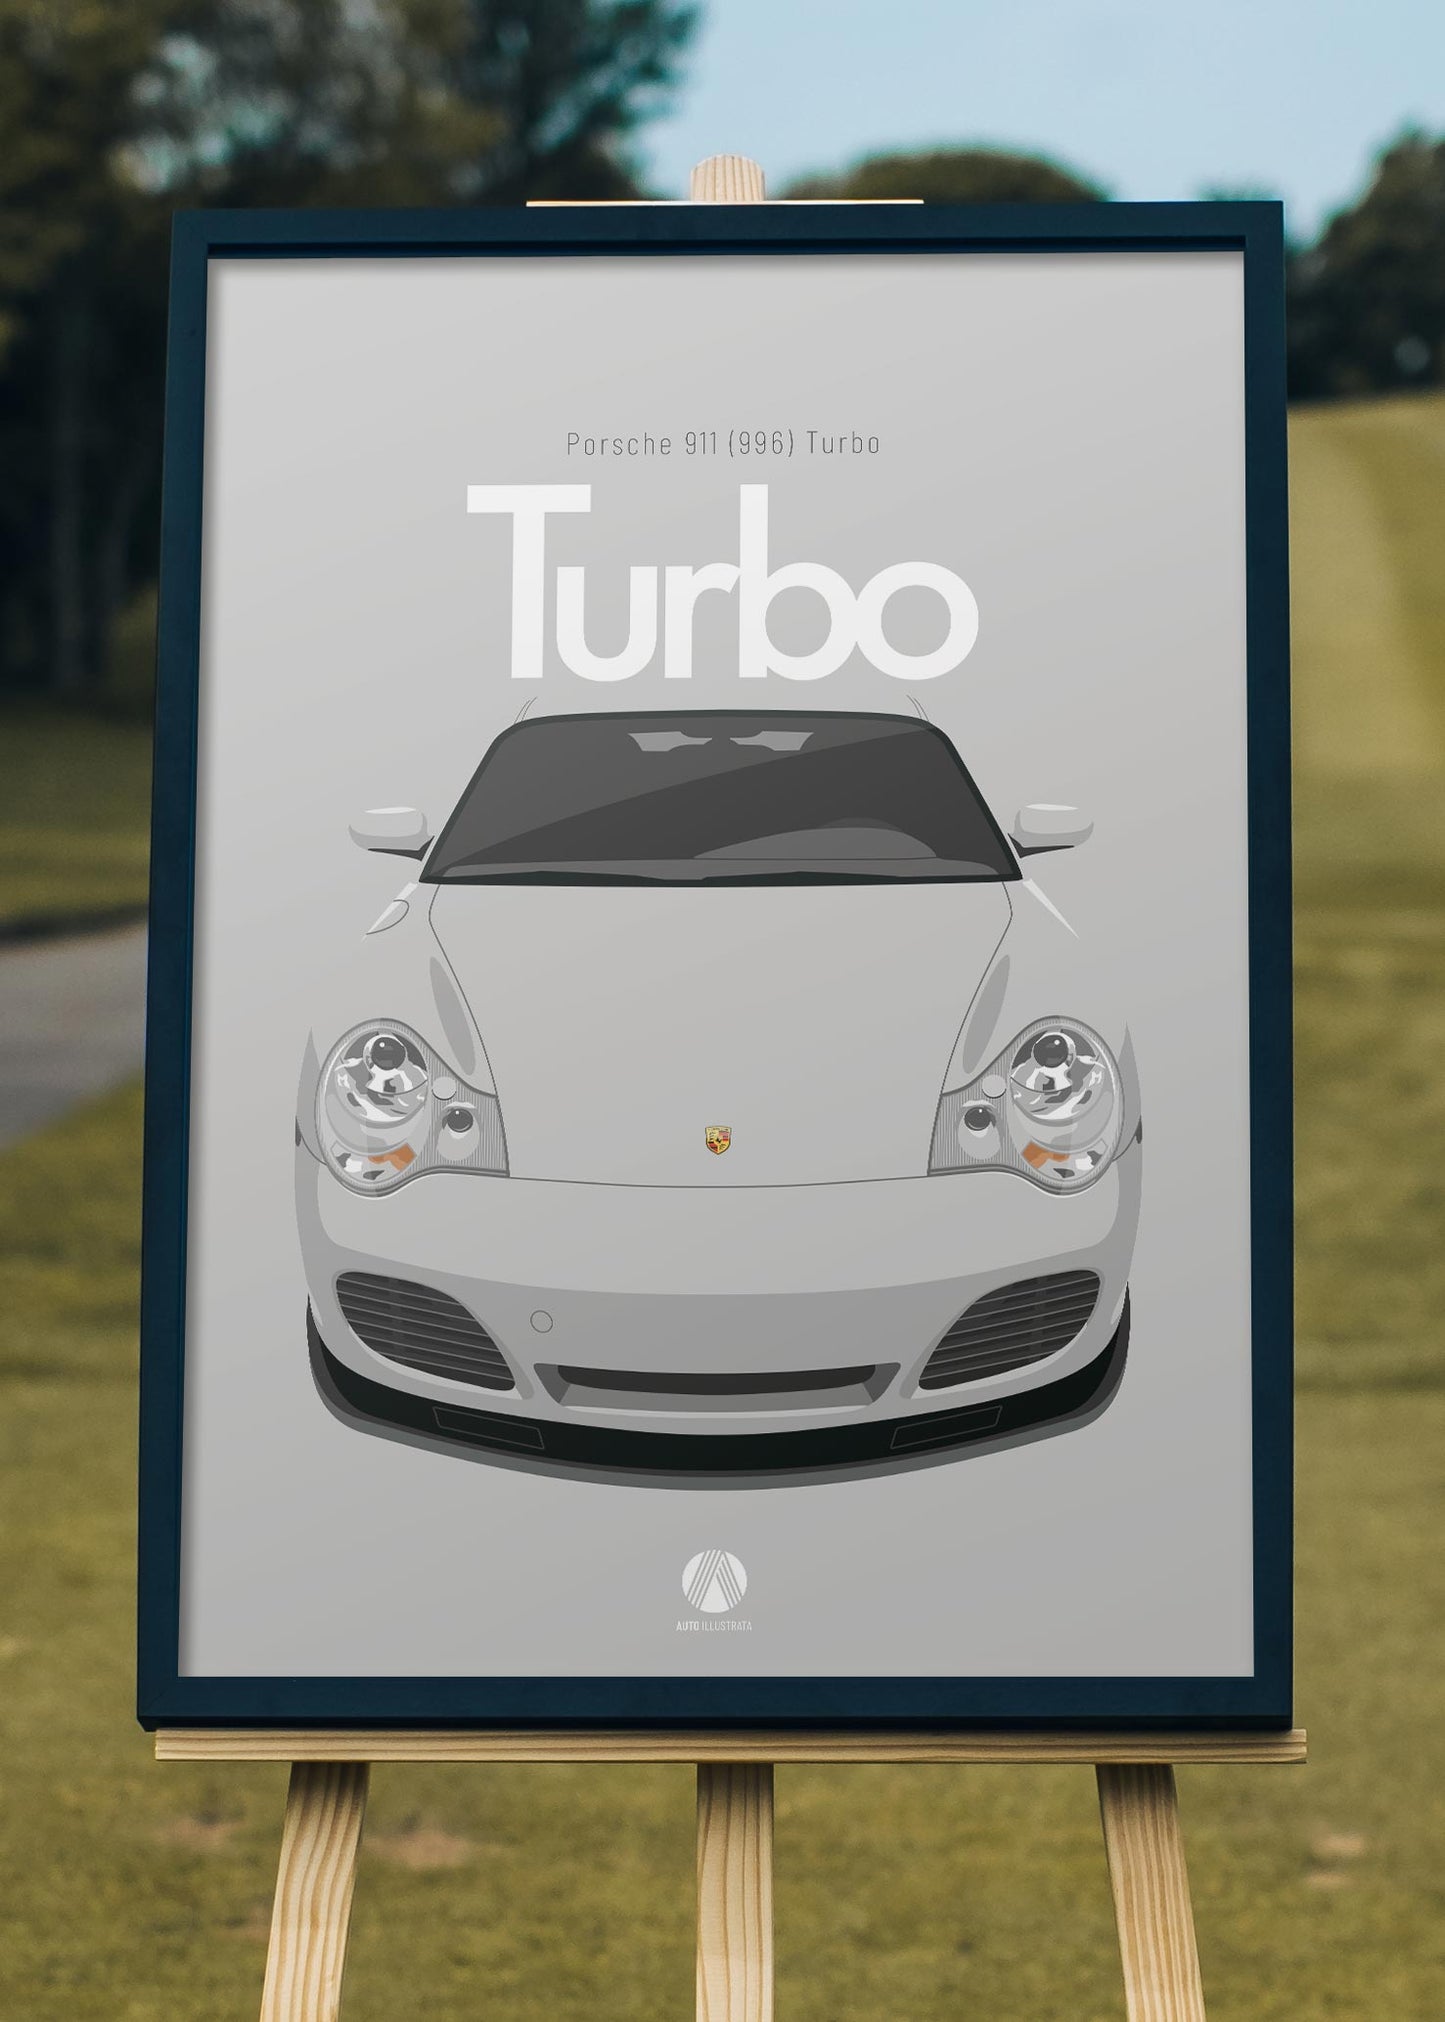 2002 Porsche 911 (996) Turbo - Artic Silver - poster print